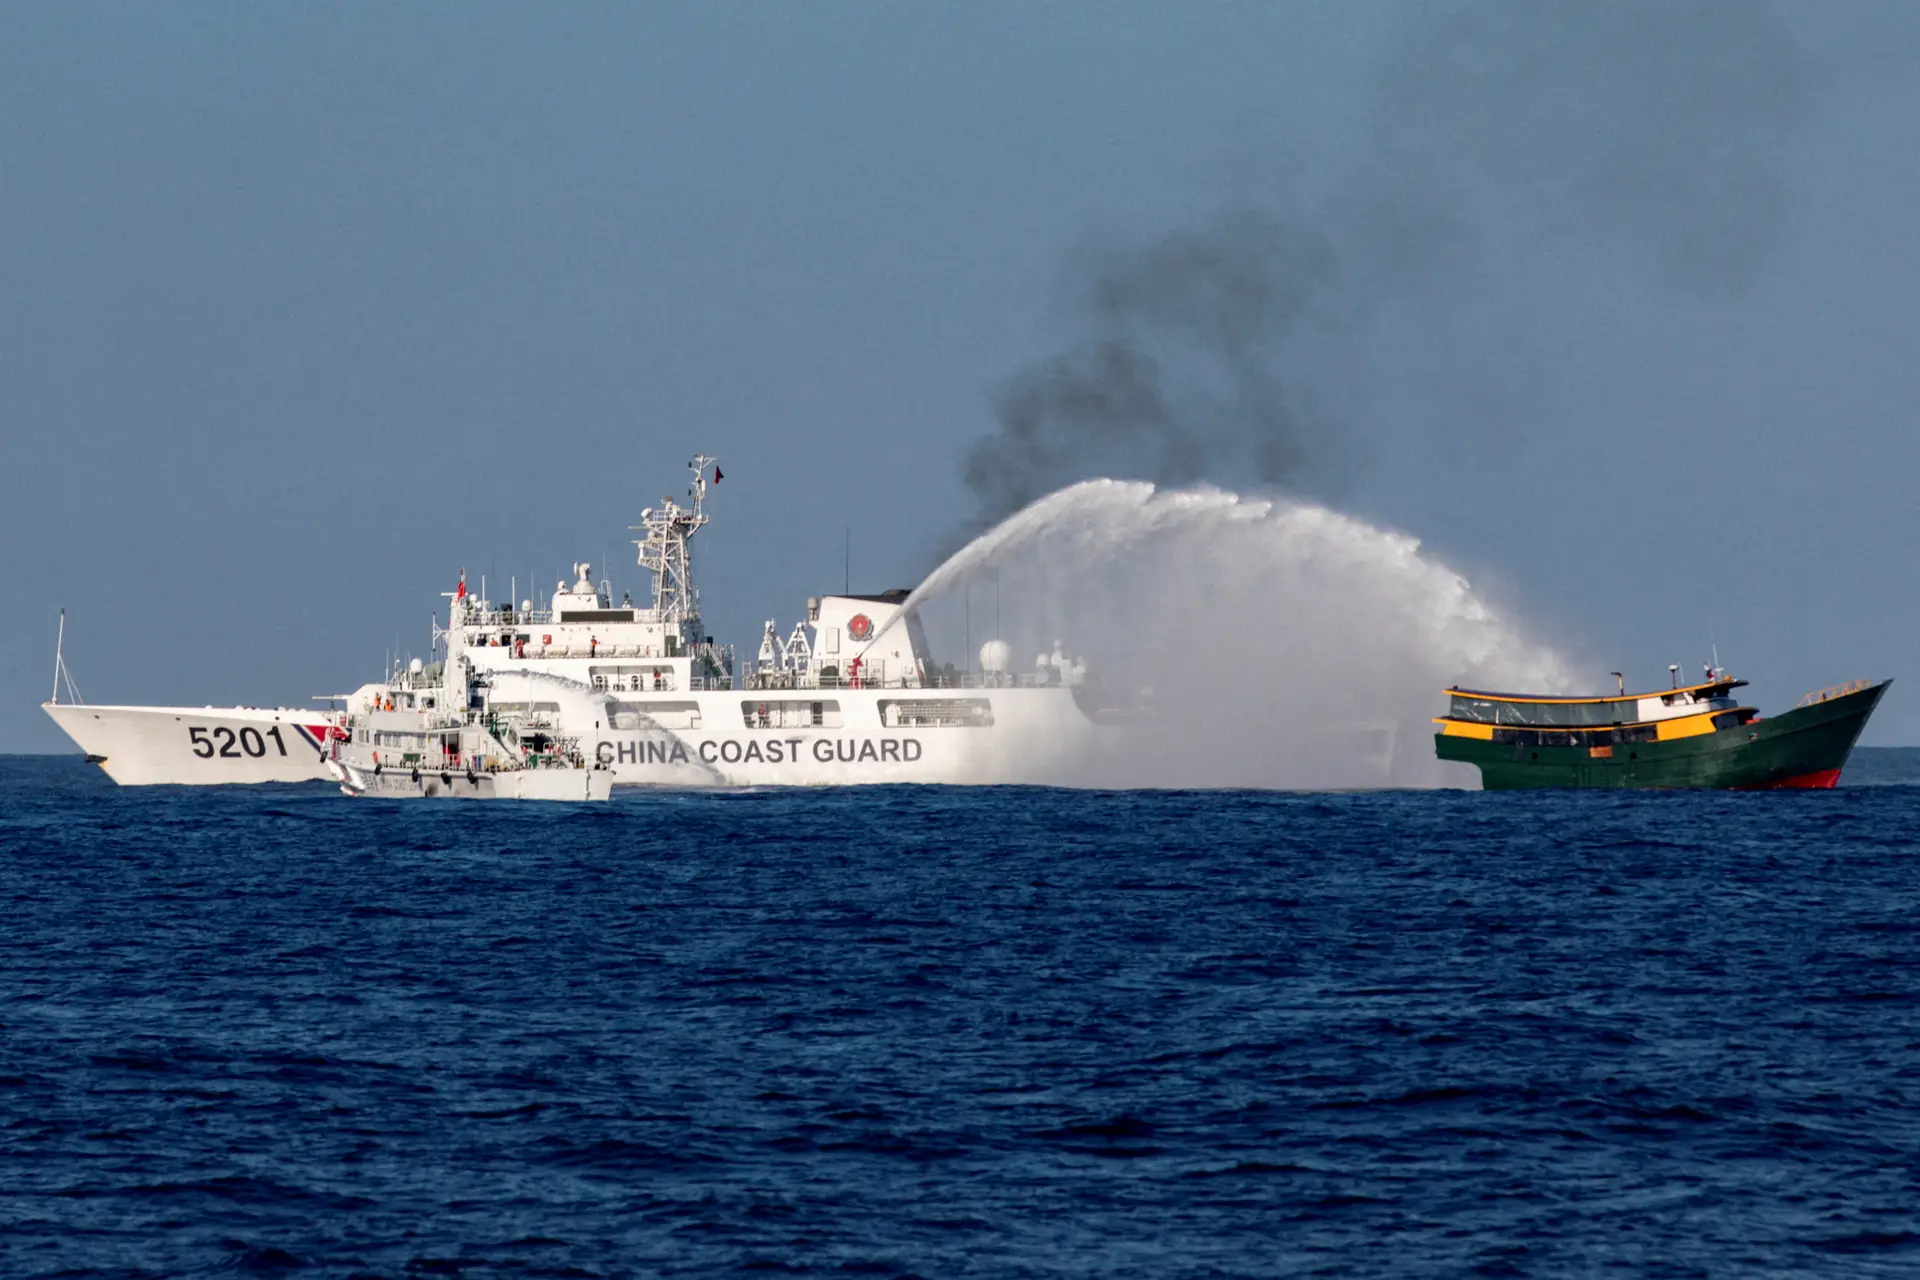 Filipinas acusam China de danificar navios e bloquear atol